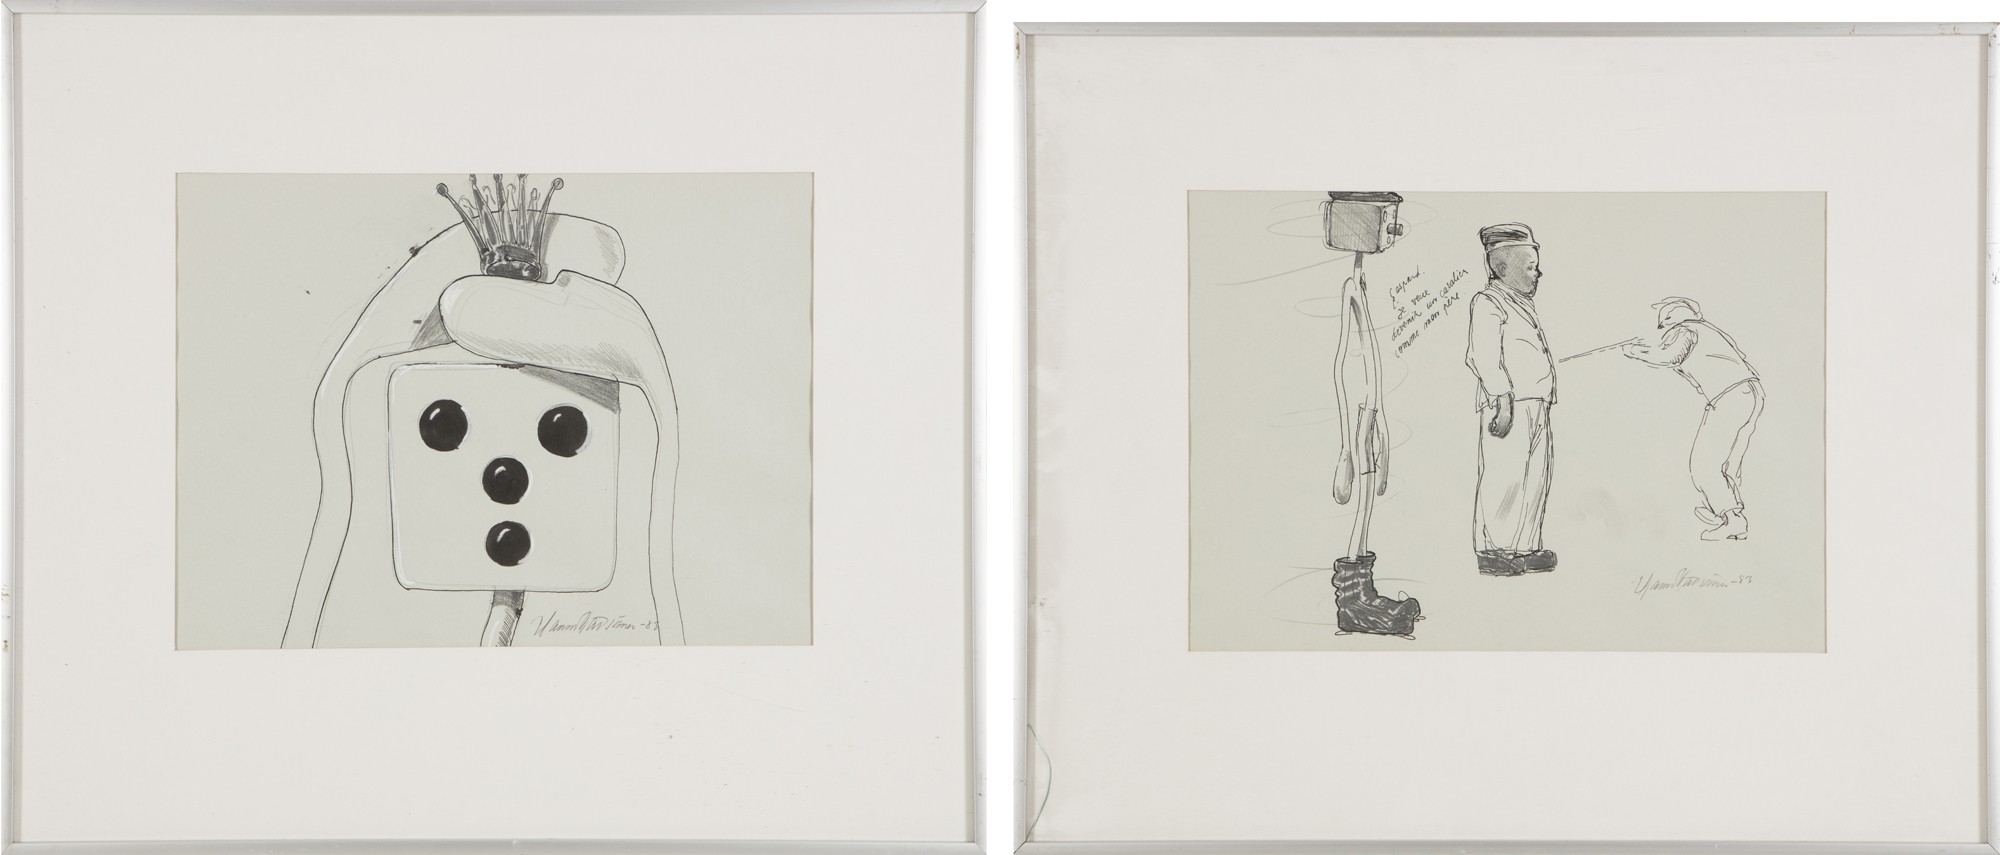 2 works, Untitled by Hannu Väisänen, 1983